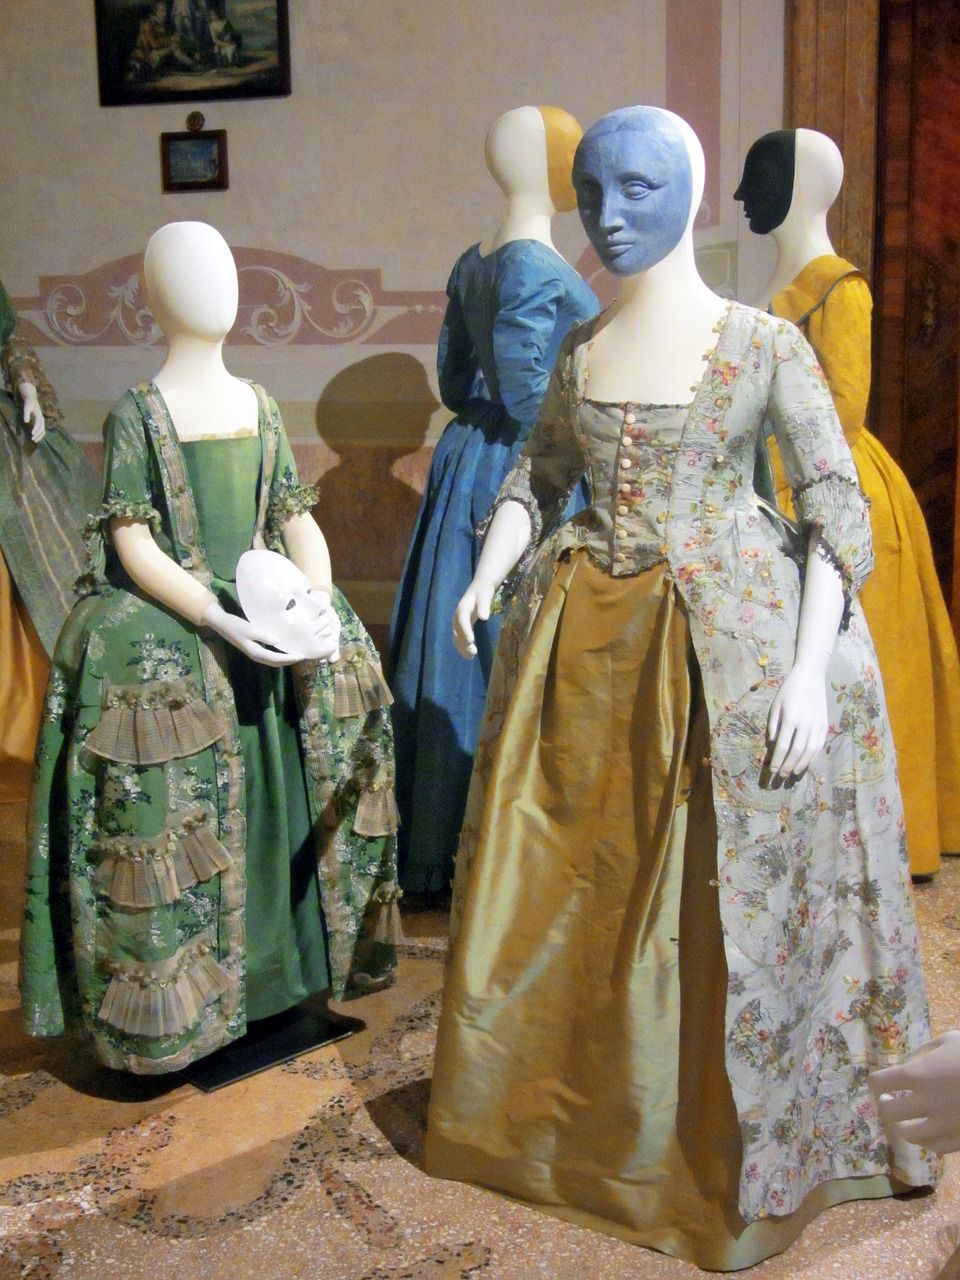 Period Venetian dresses on display